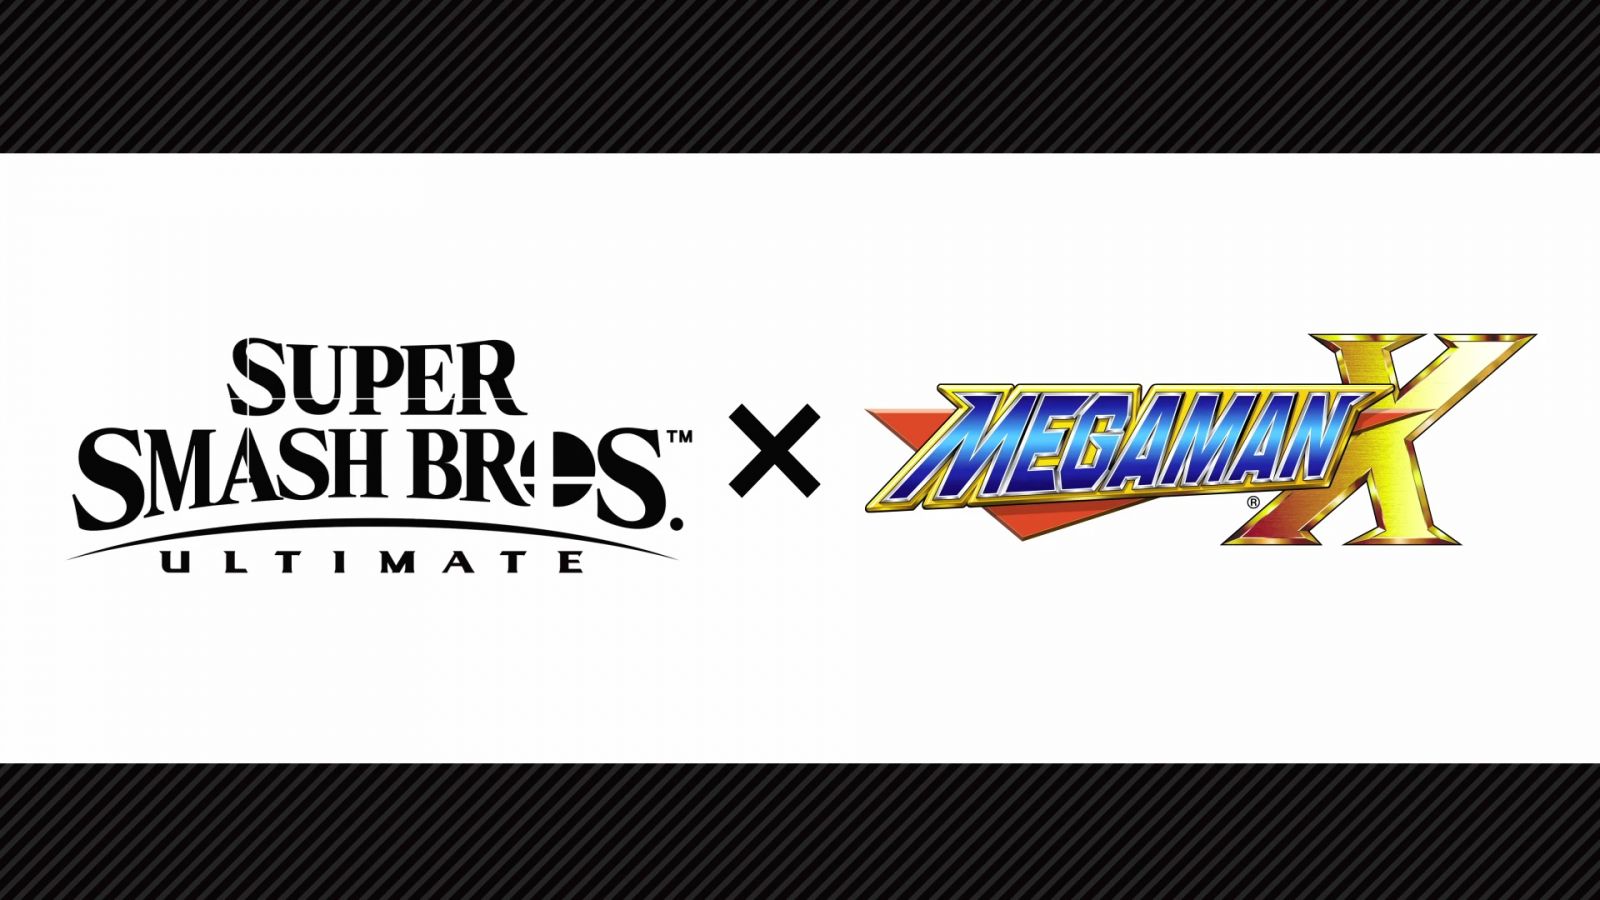 Super Smash Bros. Ultimate - Mii Fighter Costumes #3 - Nintendo Switch_20190908_121036.577.jpg